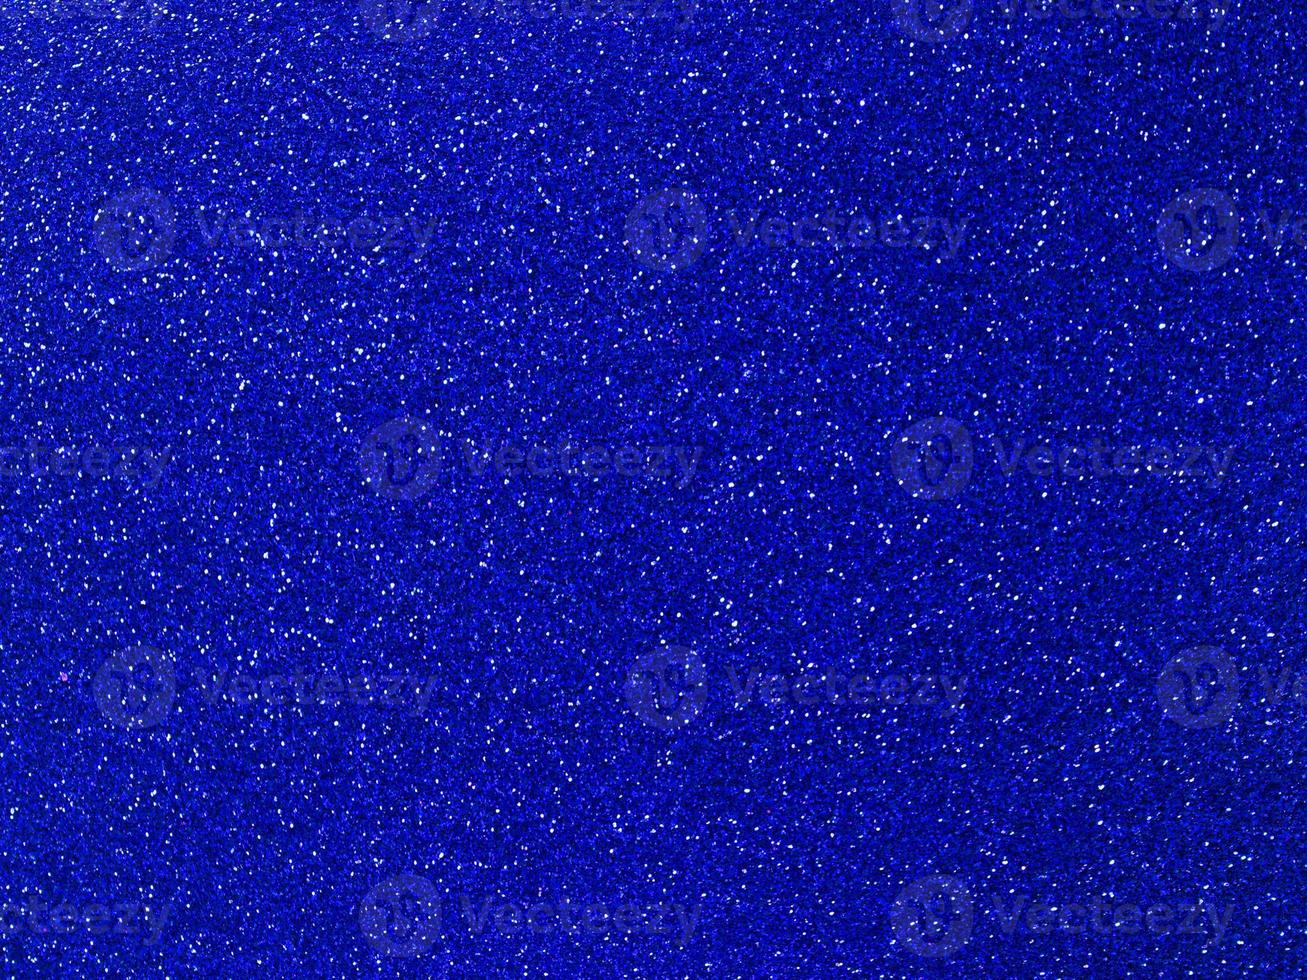 textura de piso de cemento rugoso abstracto brillo azul oscuro para desenfoque de fondo navidad foto